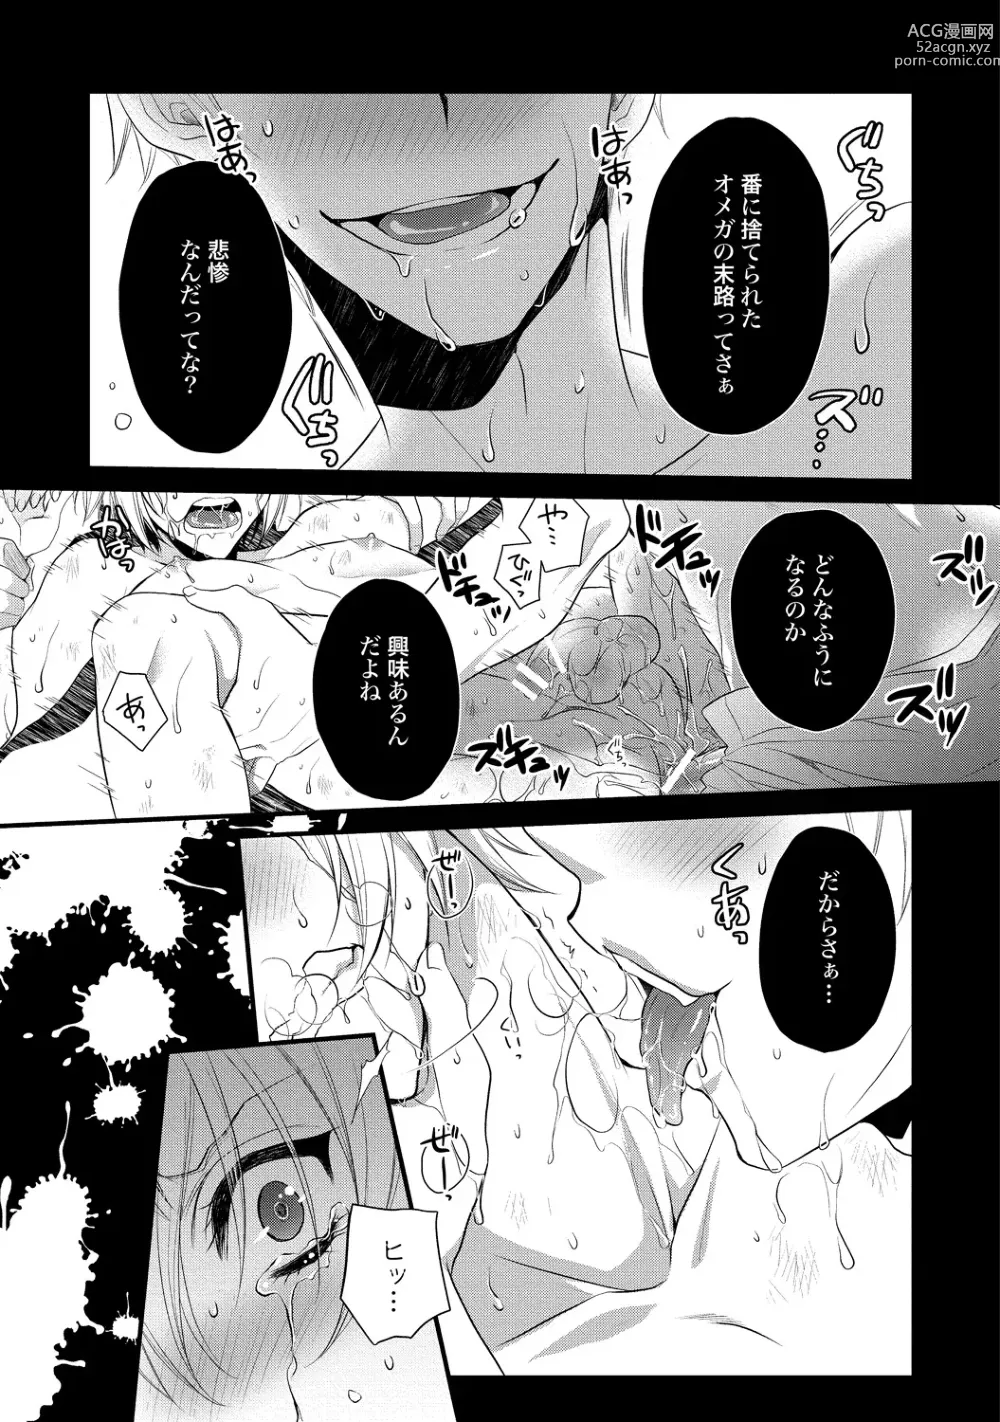 Page 7 of manga Zetsurin Do S na Alpha Counselor